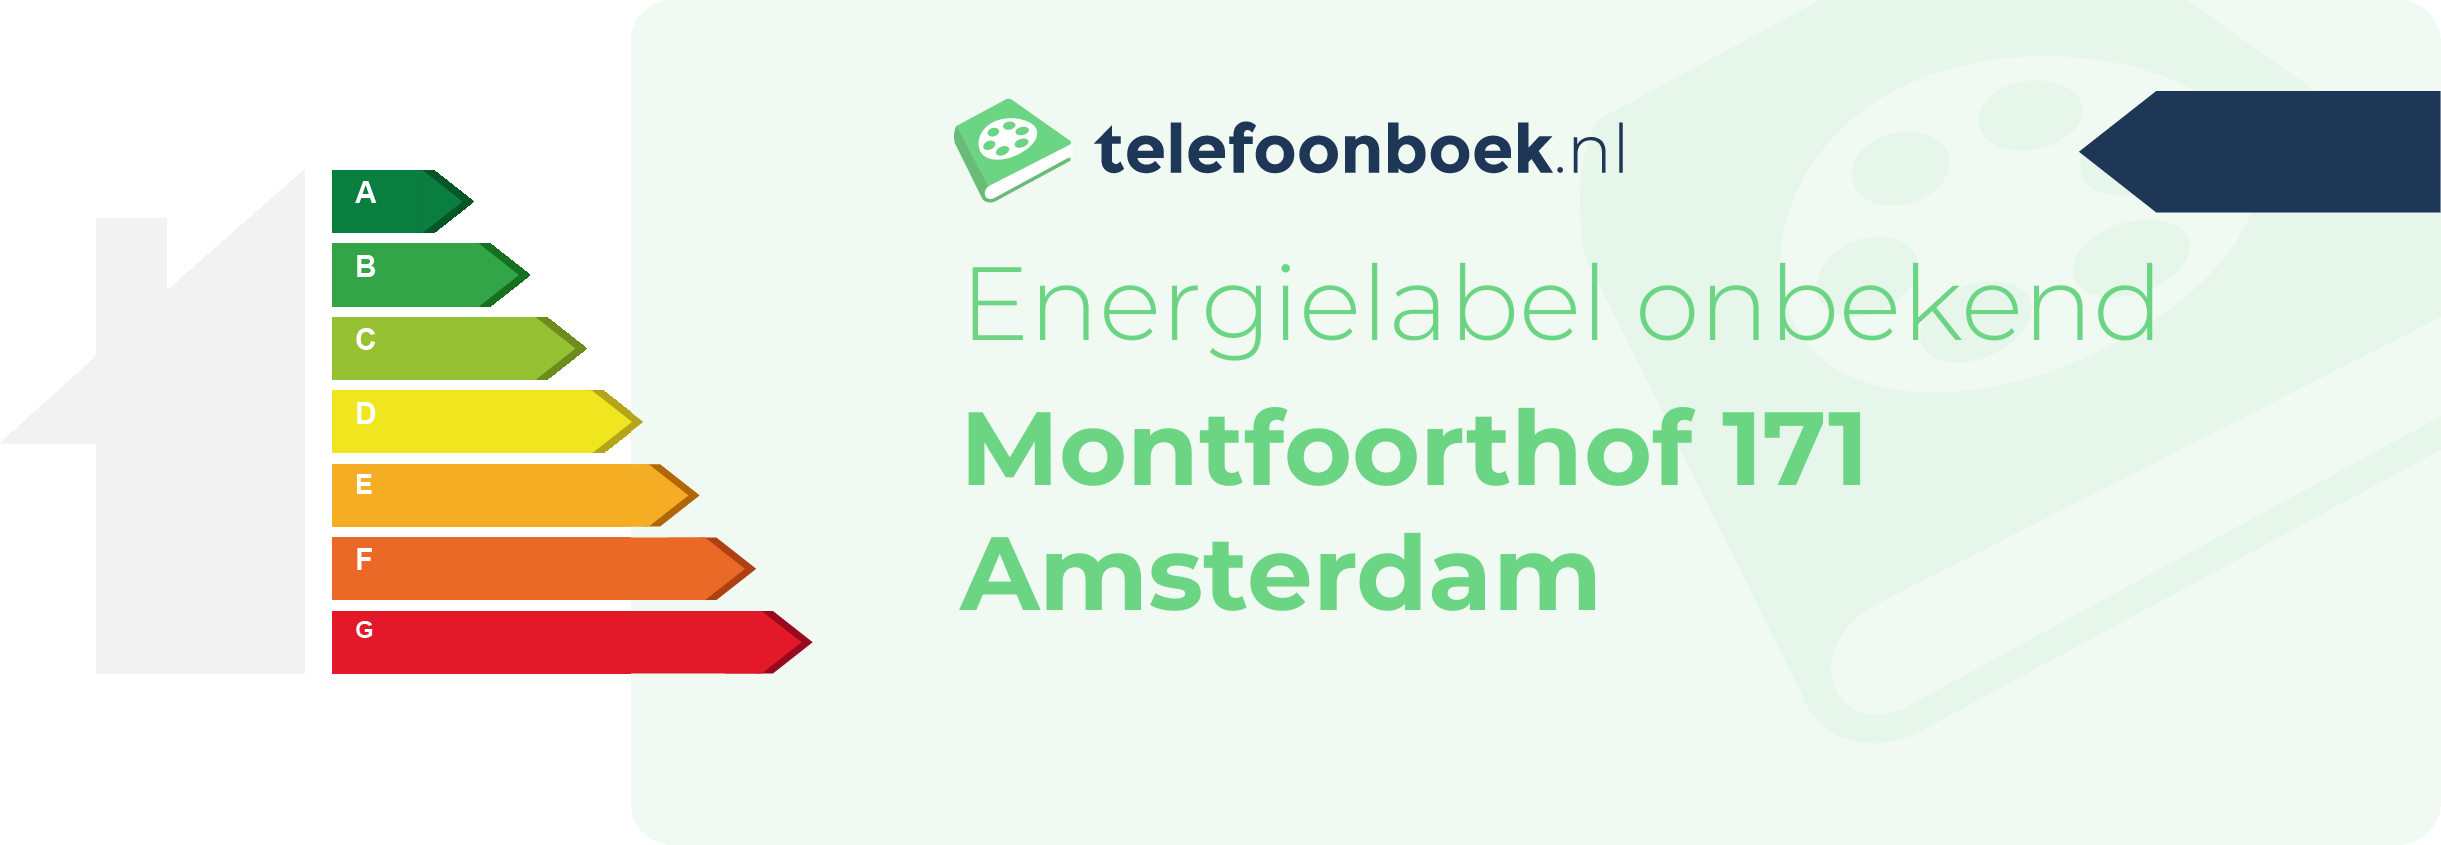 Energielabel Montfoorthof 171 Amsterdam